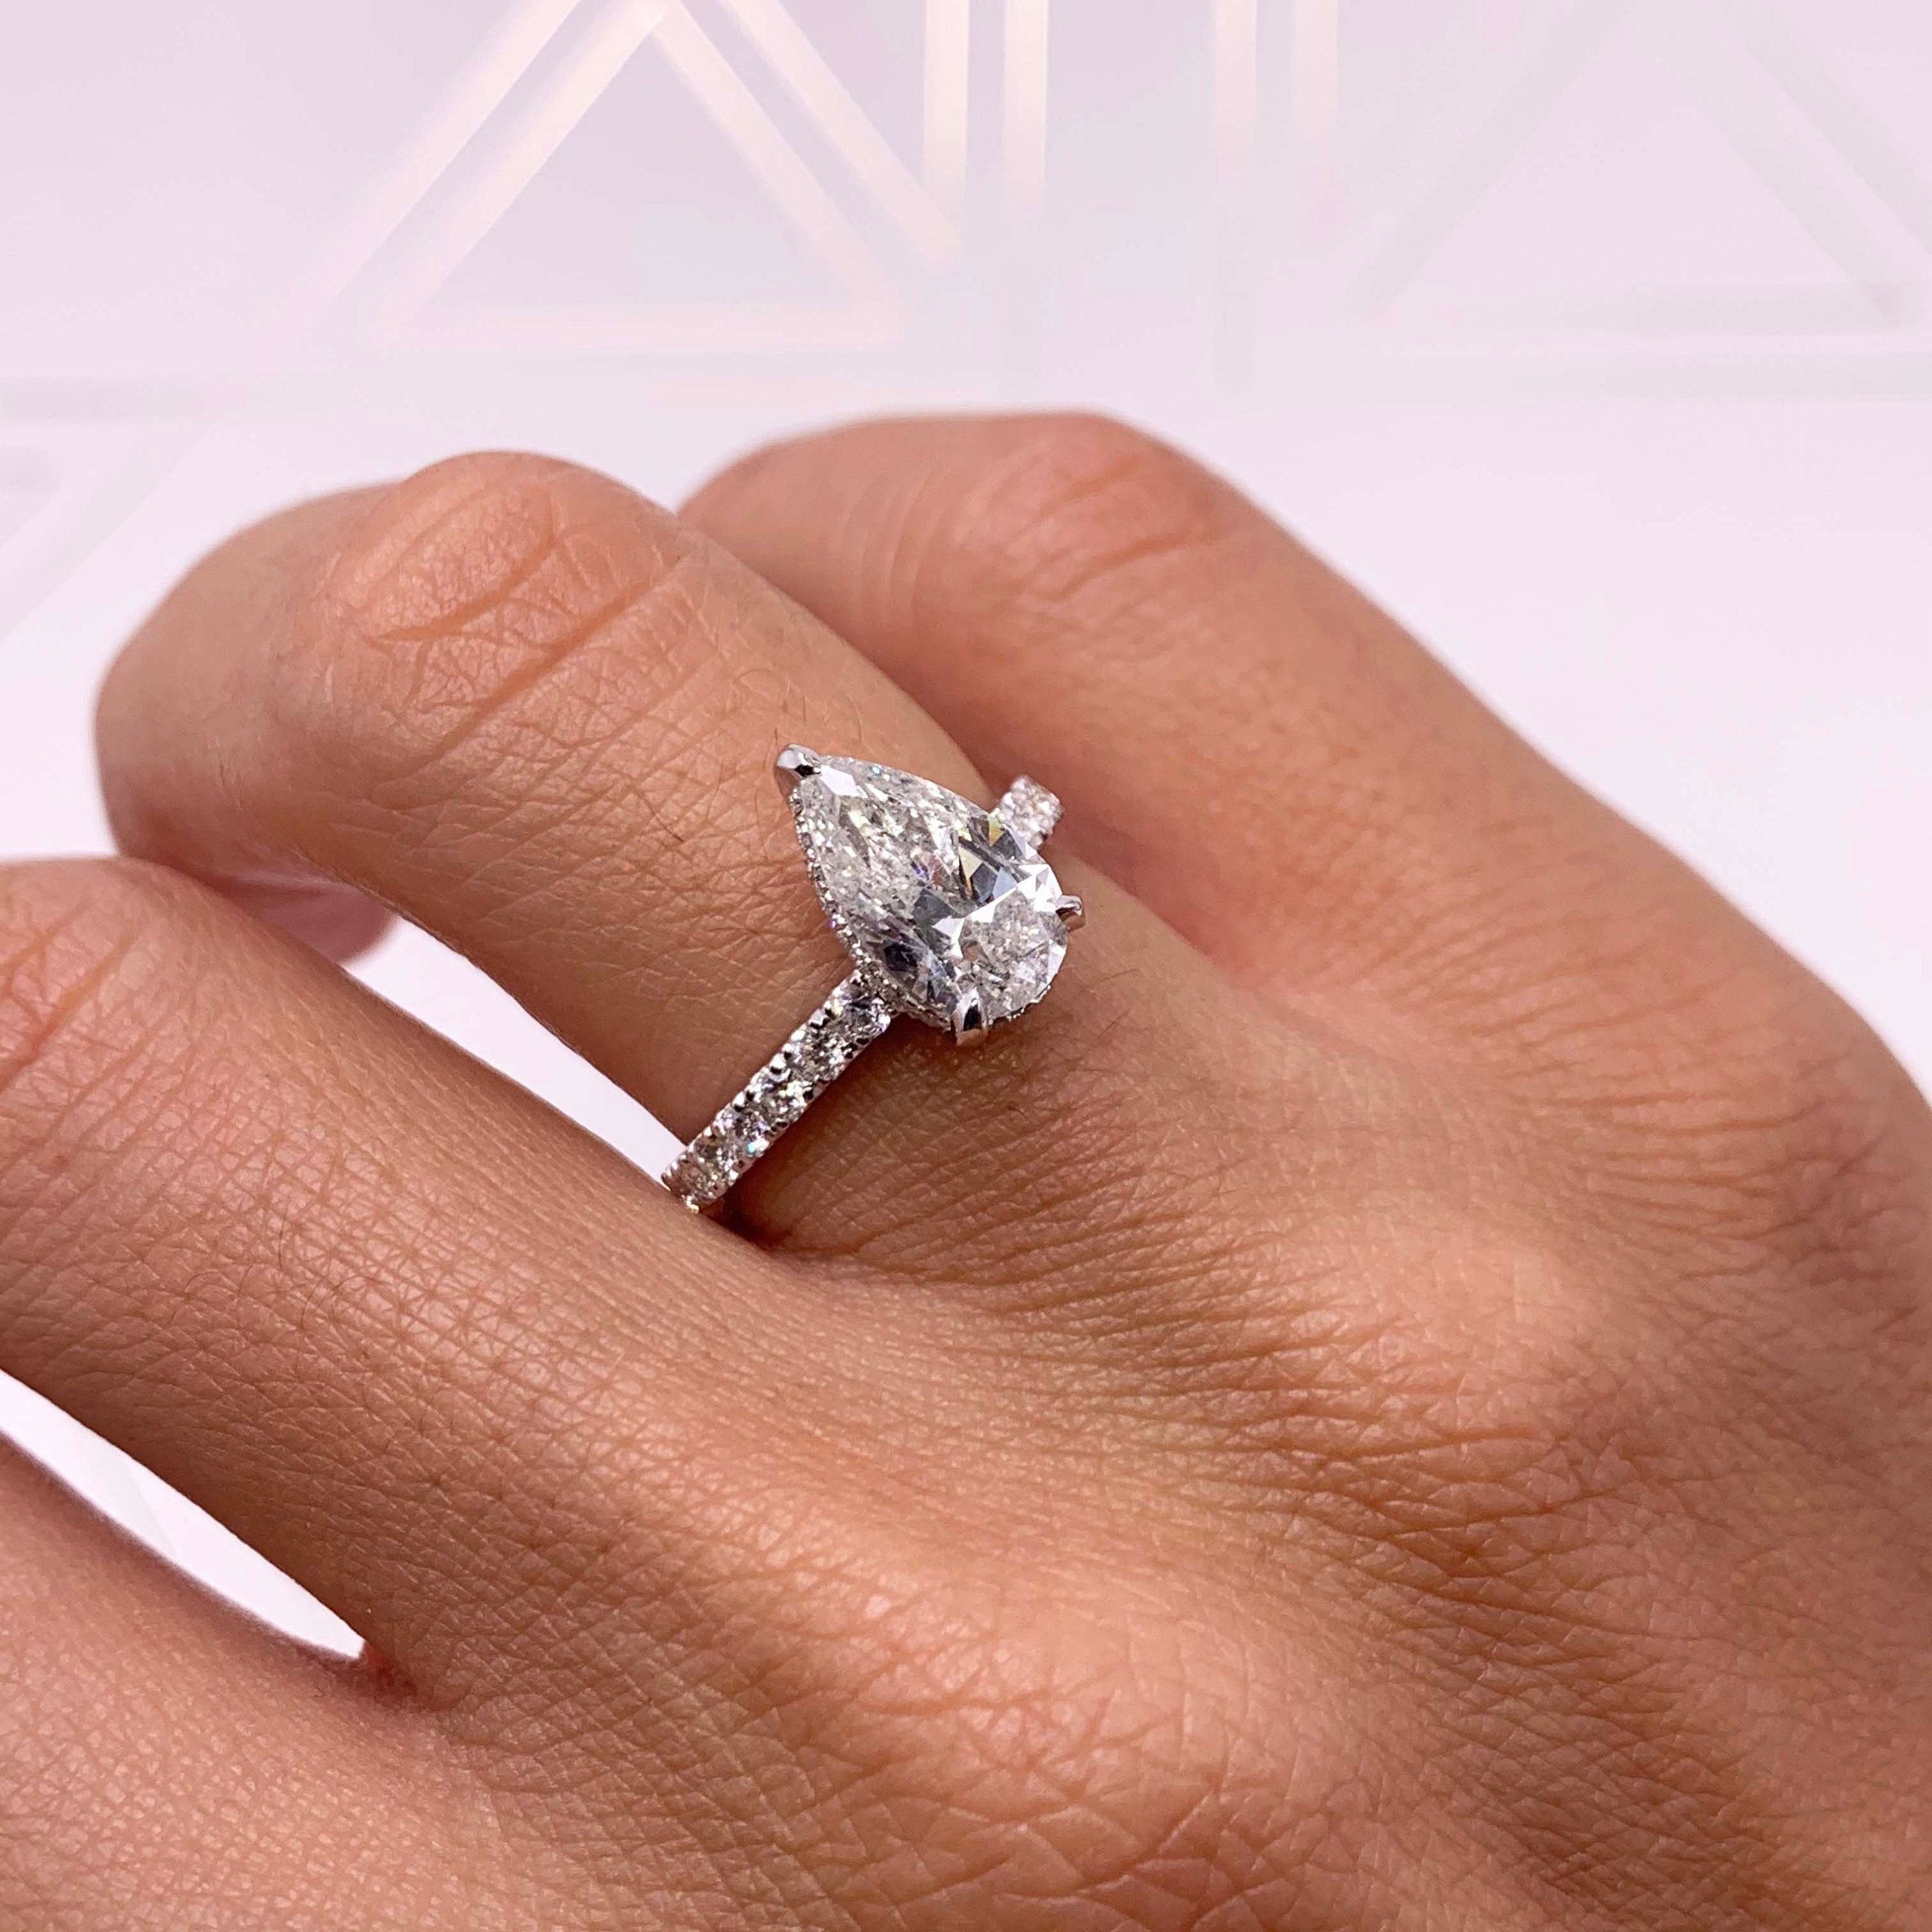 Buy Designer 2 CT Pear Shape Real Diamond Engagement Ring Online